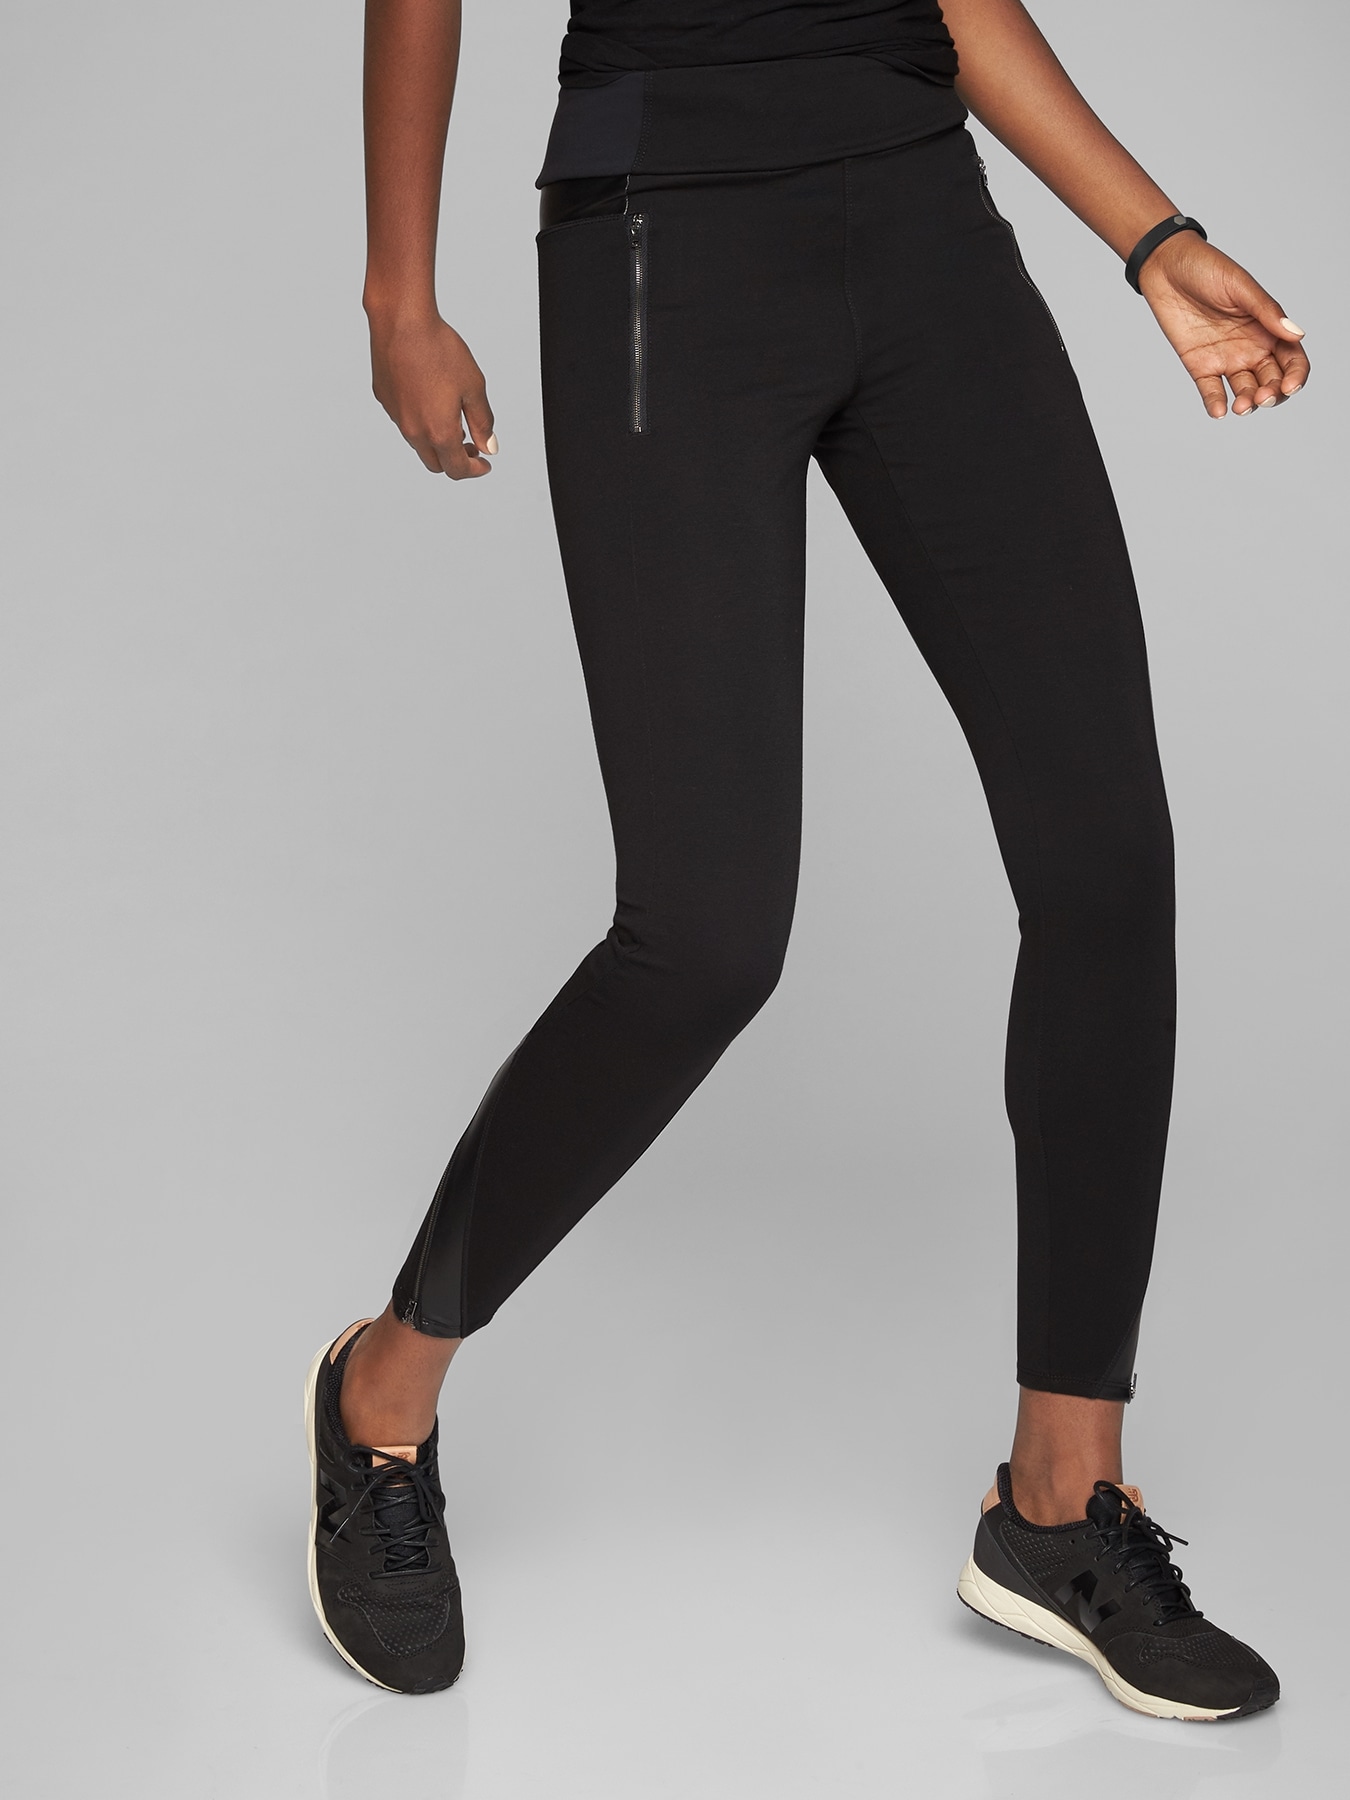 Athleta Ponte Classic Pant in Black Women's NWT Size 0 color Black